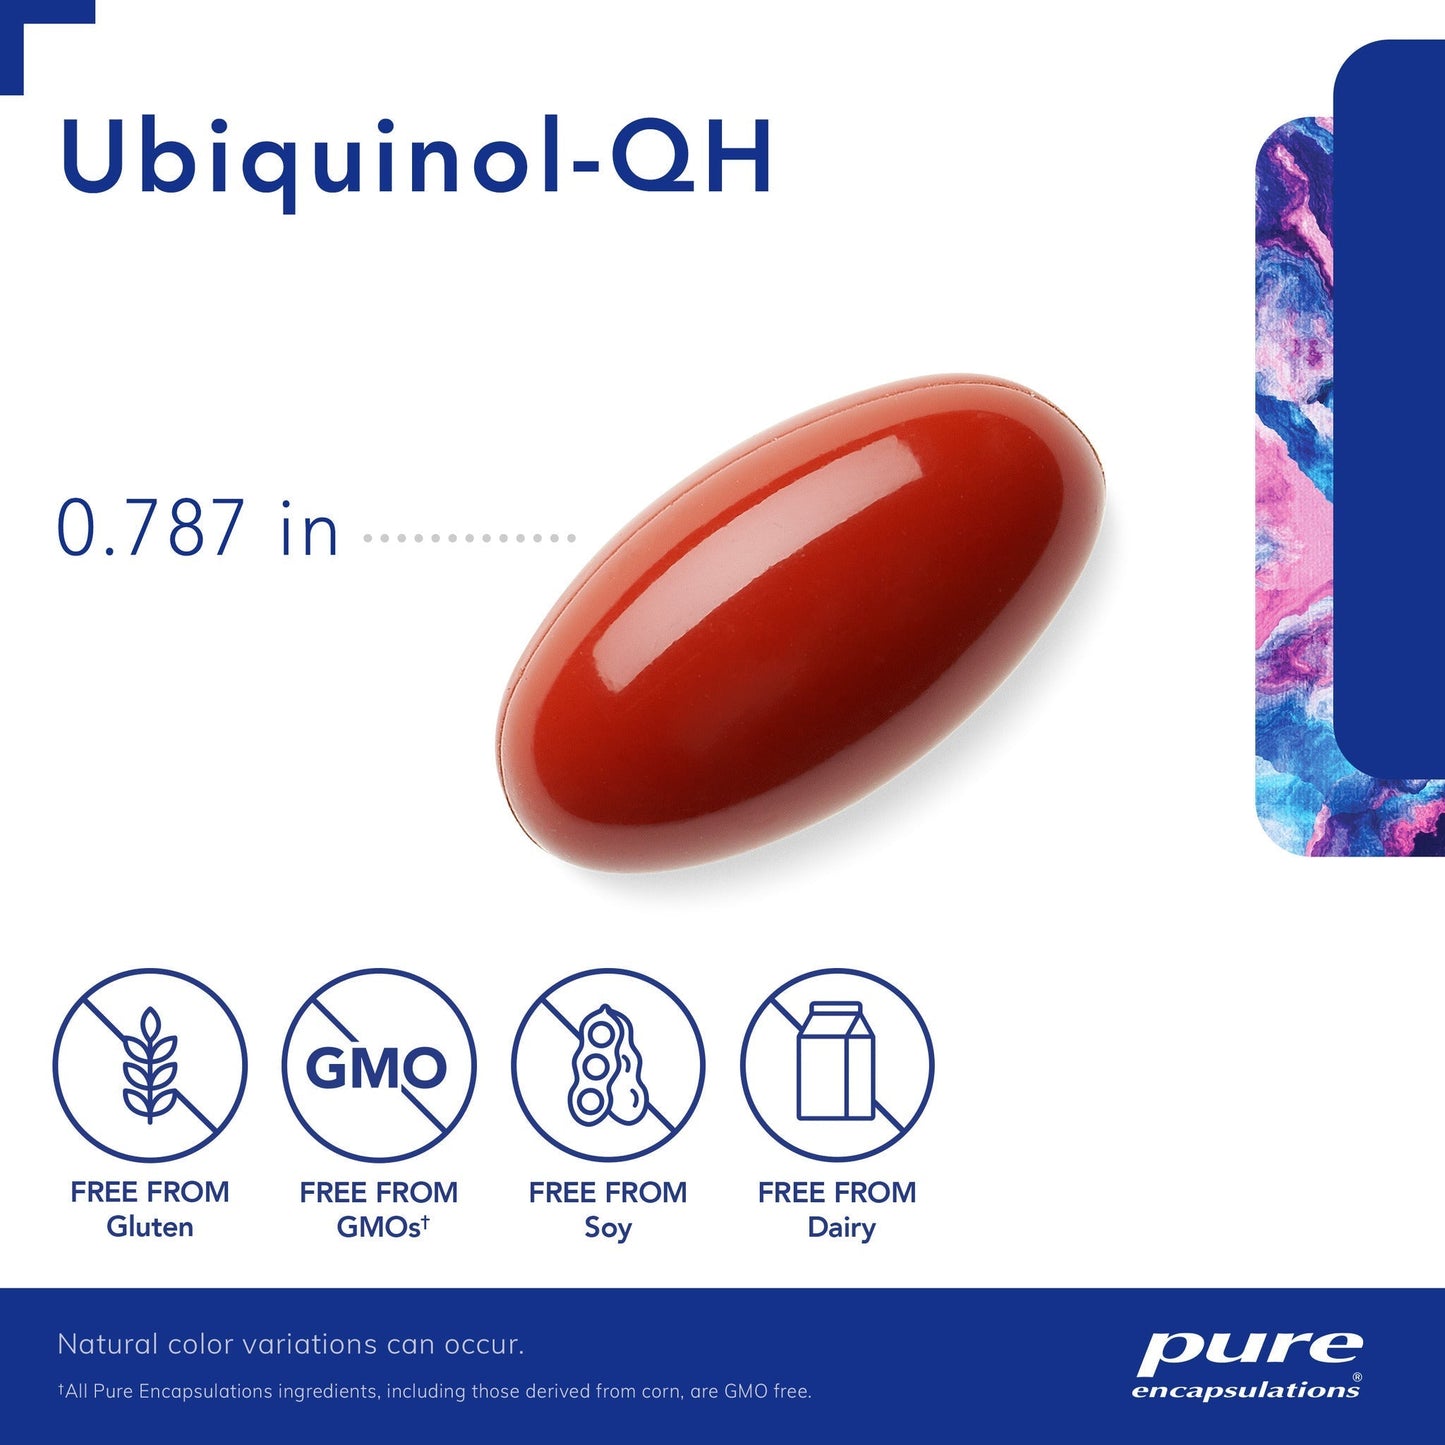 Ubiquinol QH 50 mg